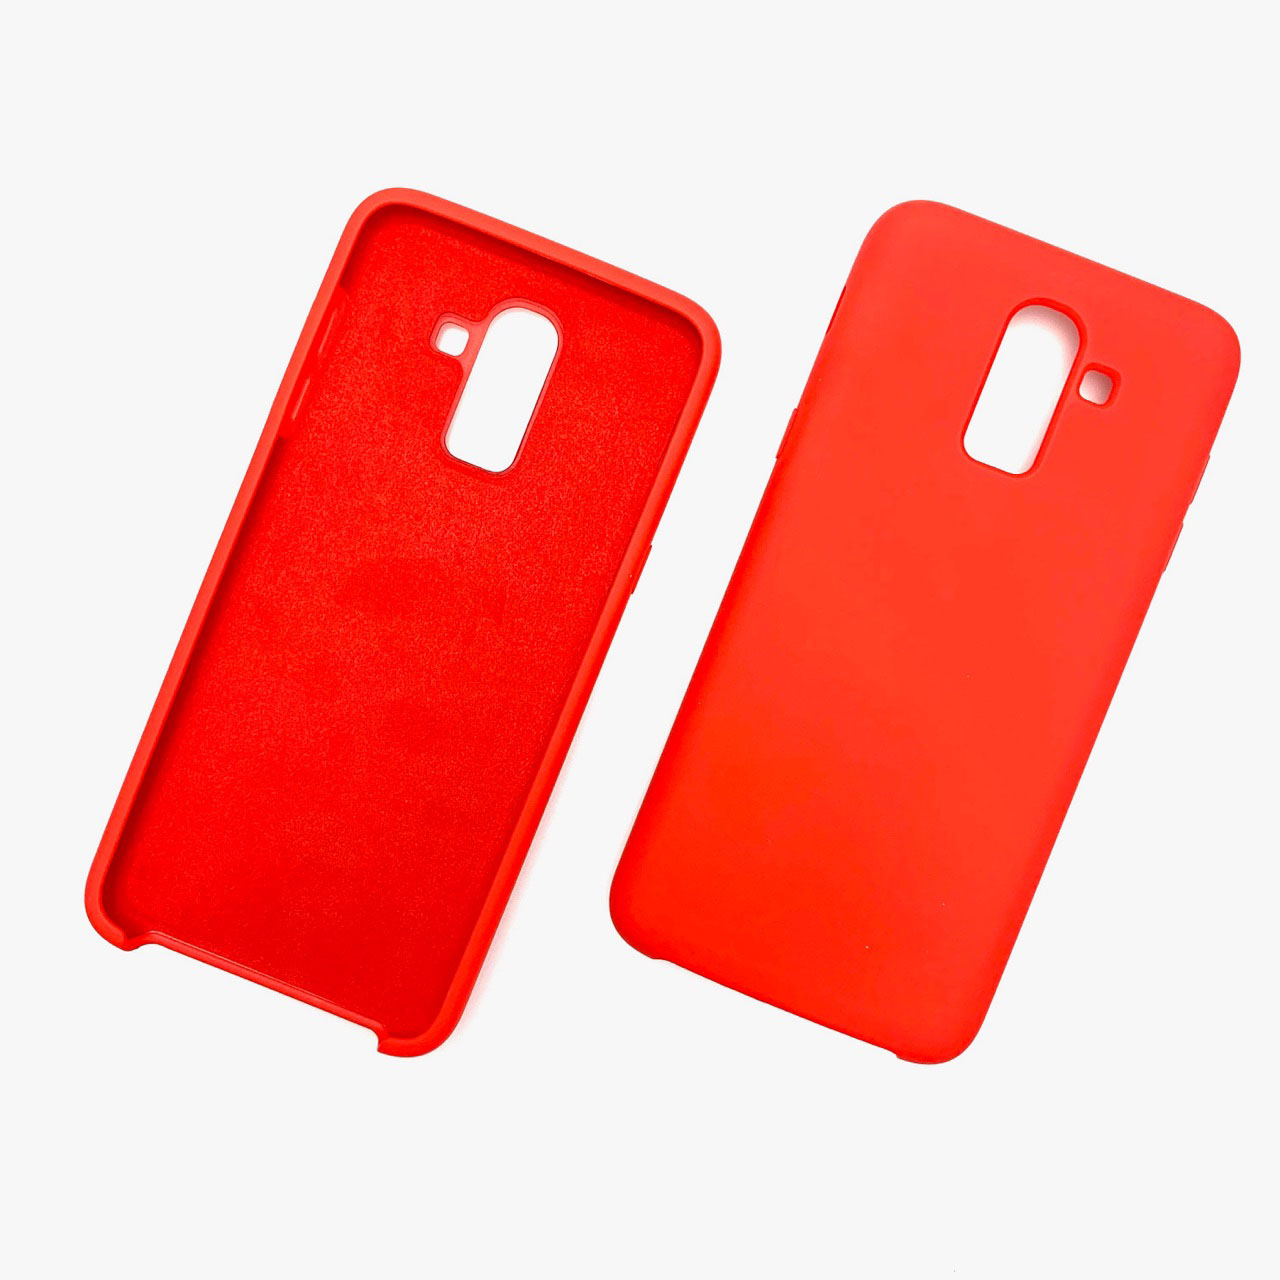 Чехол накладка Silicon Cover для SAMSUNG Galaxy J8 (SM-J800F), силикон, бархат, цвет красный.